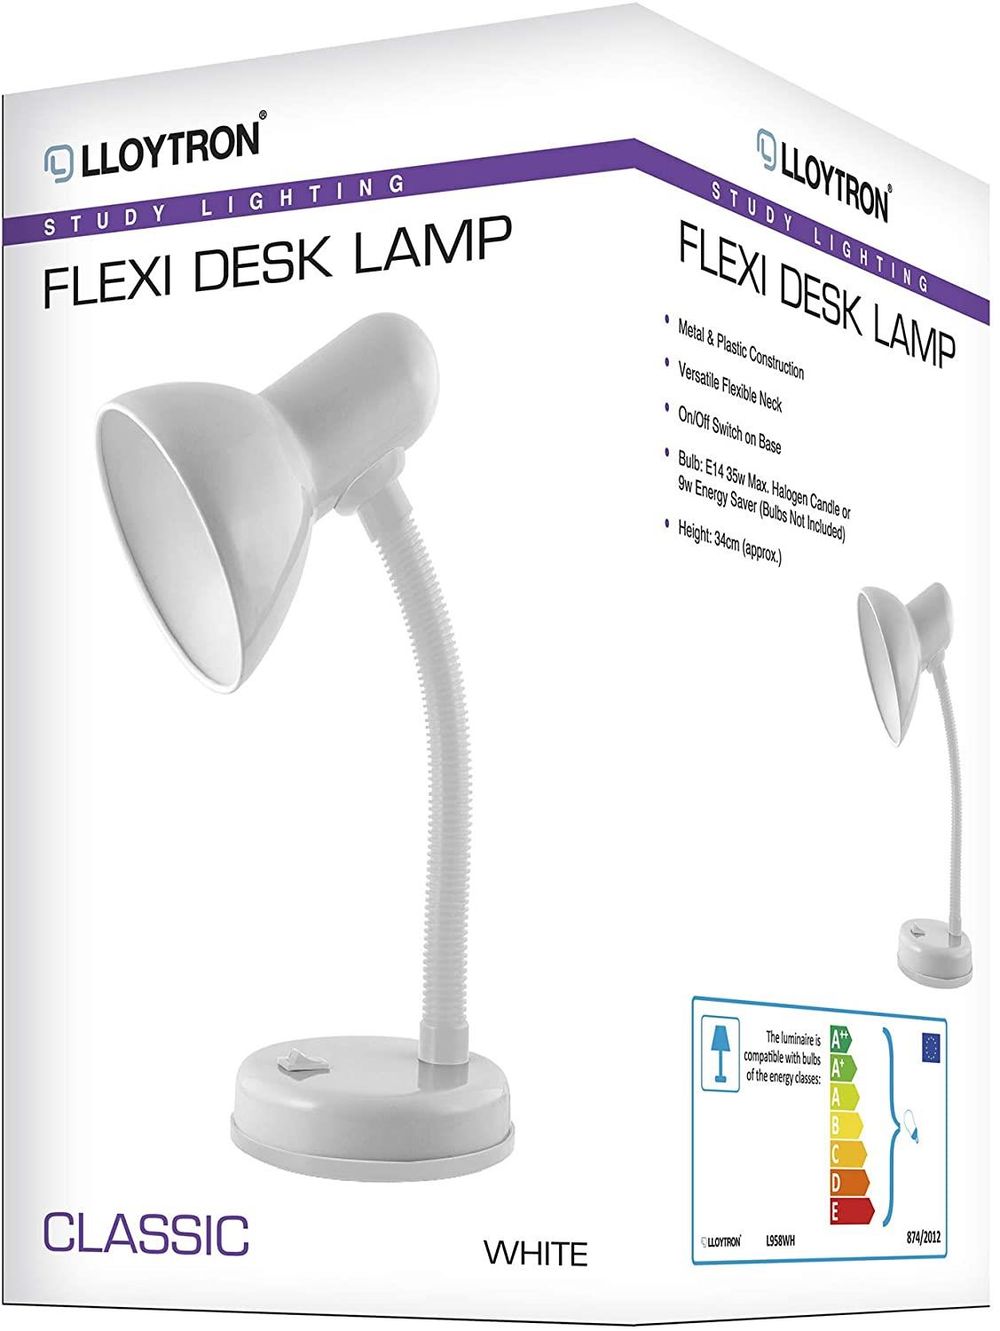 Lloytron Flexi Schreibtischlampe Weiß Deco Home Office Beleuchtung